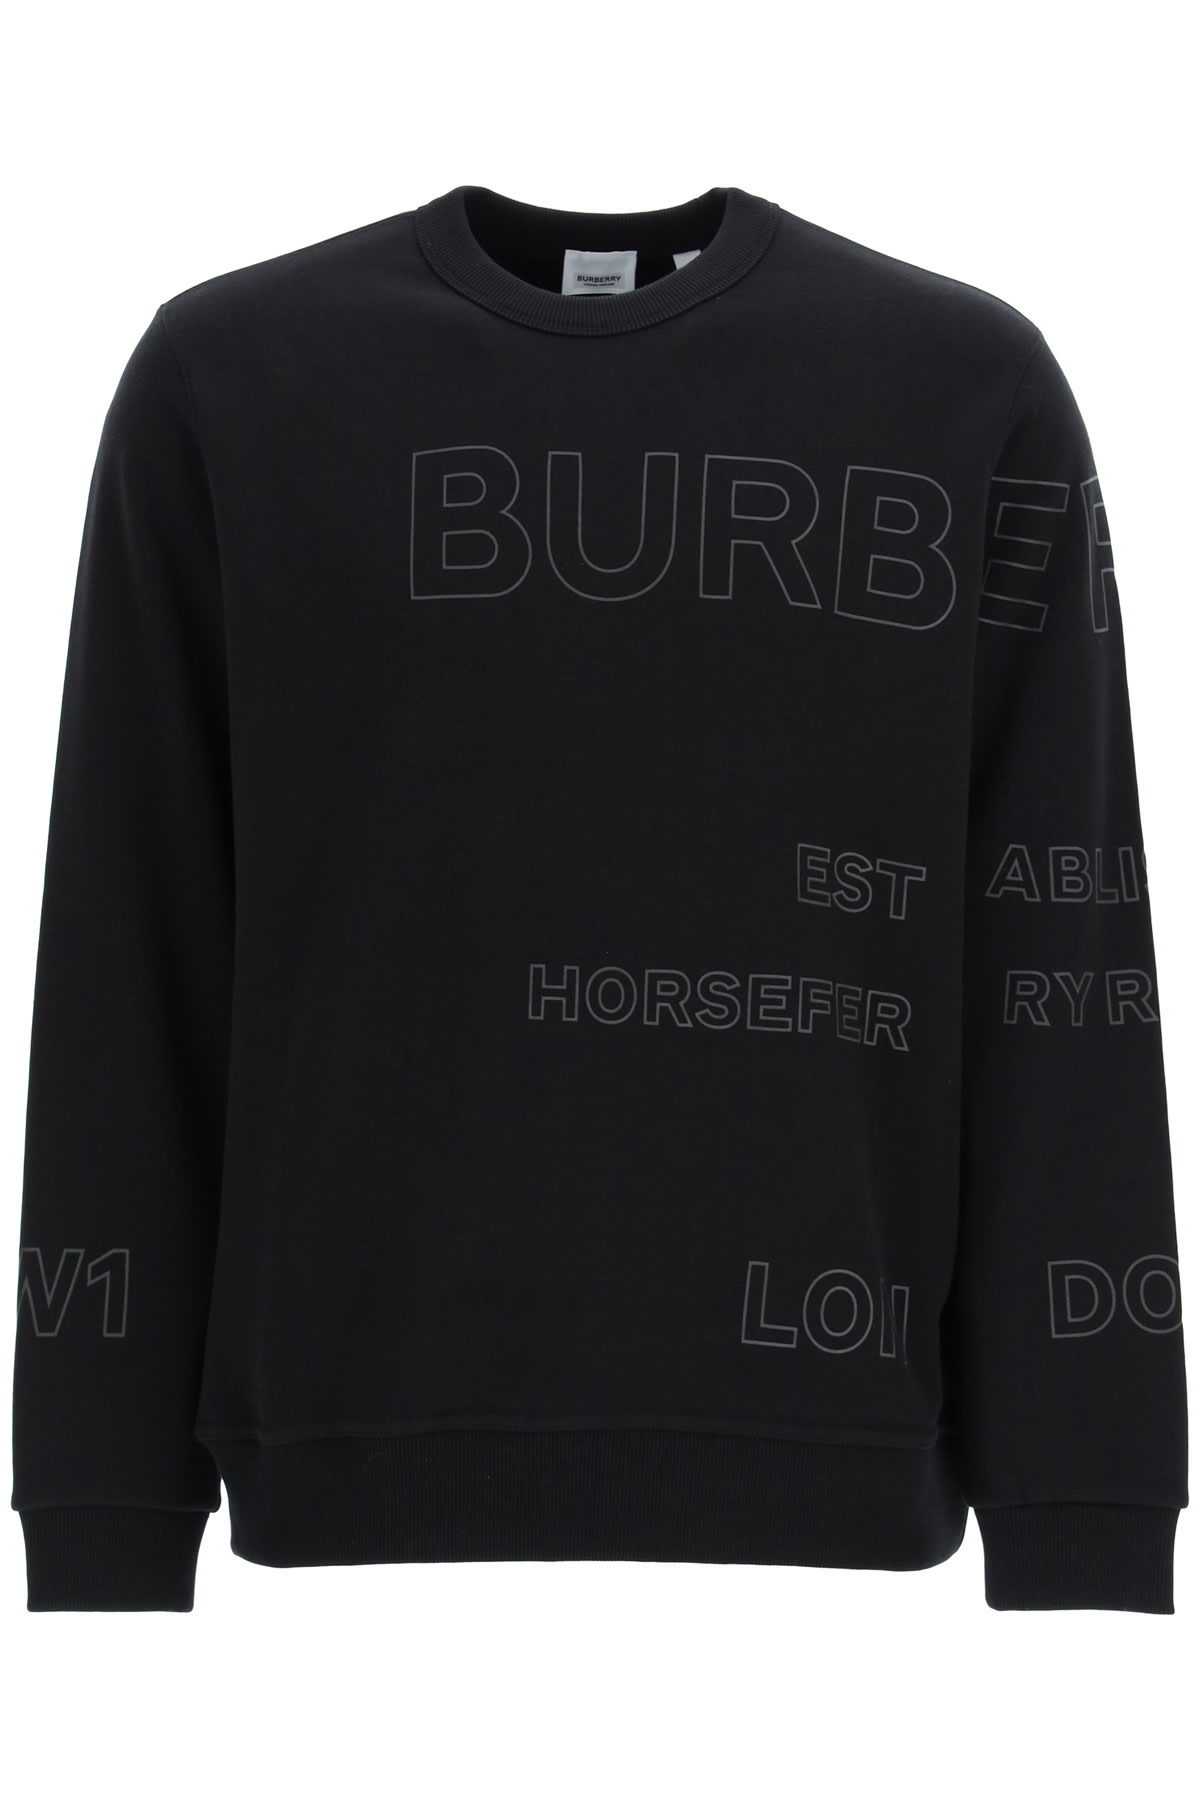 Burberry Horseferry Print Sweatshirt